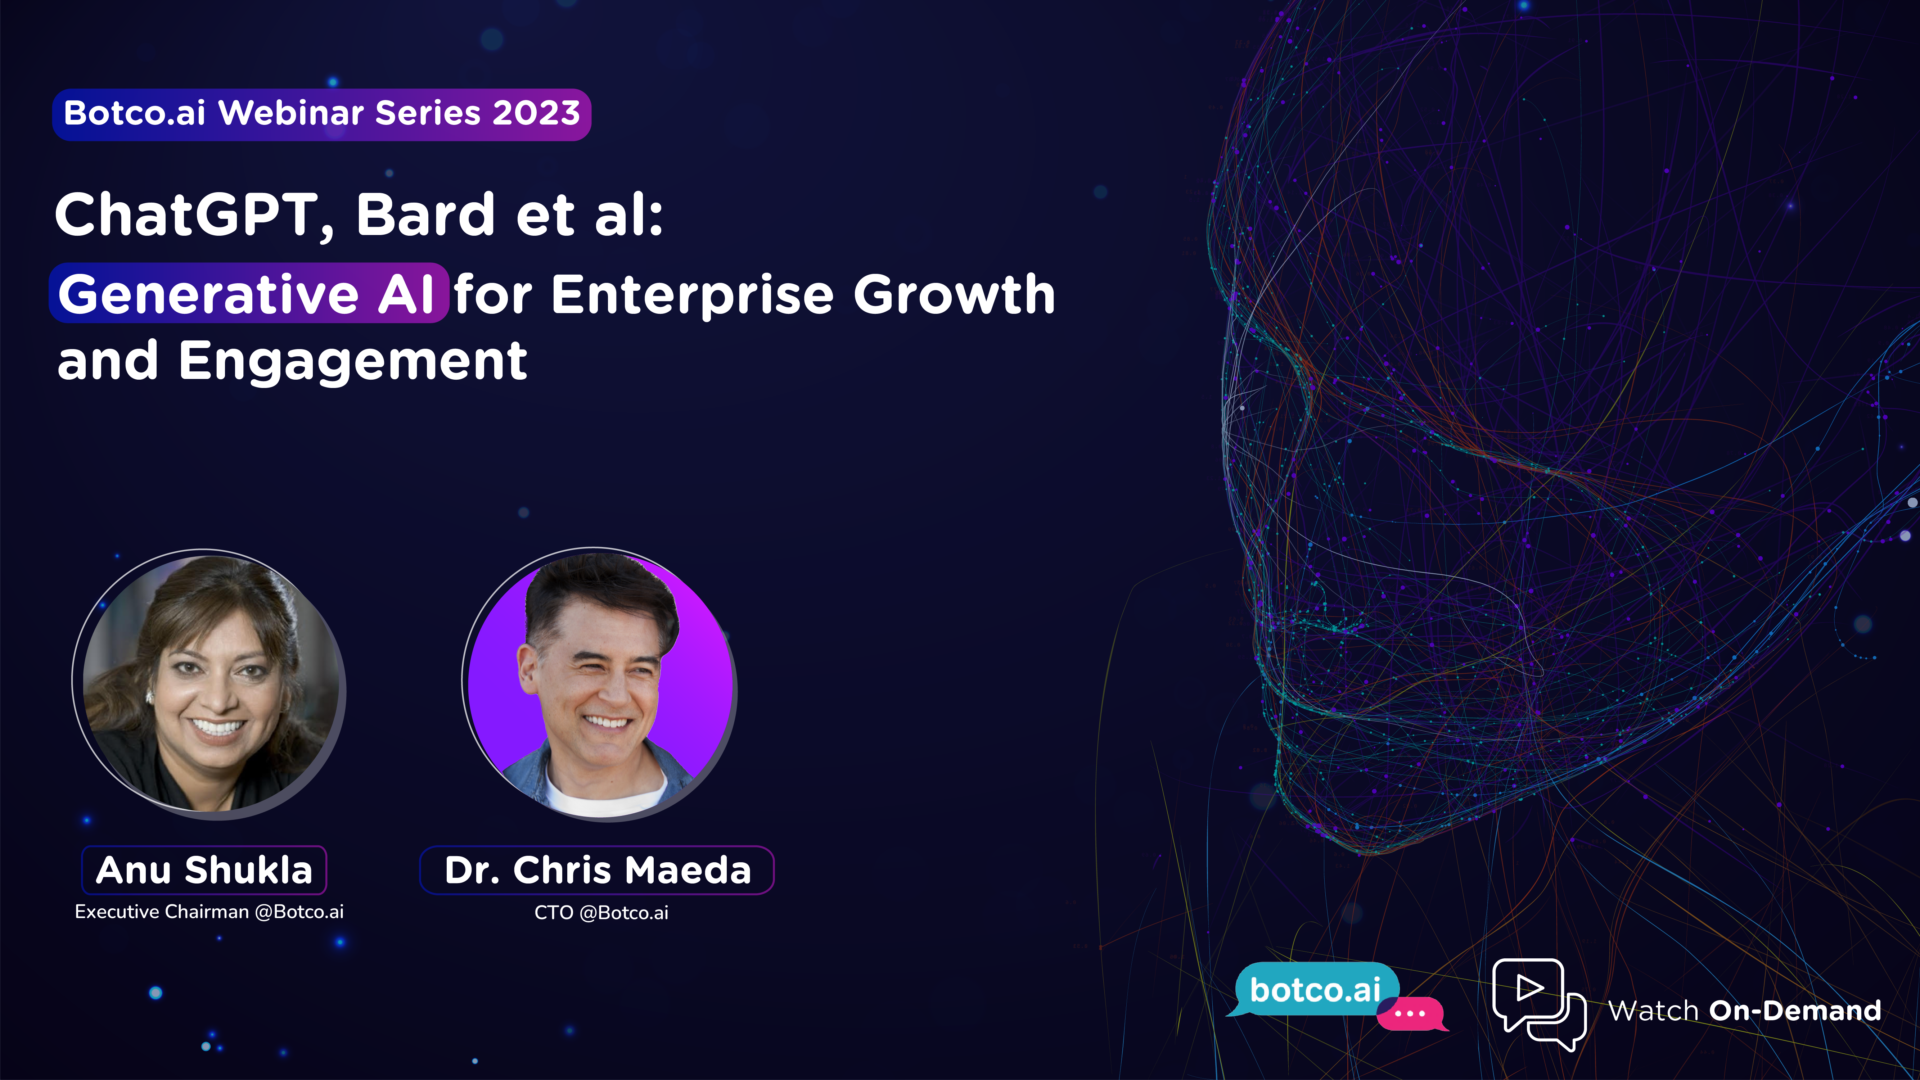 ChatGPT, Bard et al: Generative AI for Enterprise Growth and Engagement